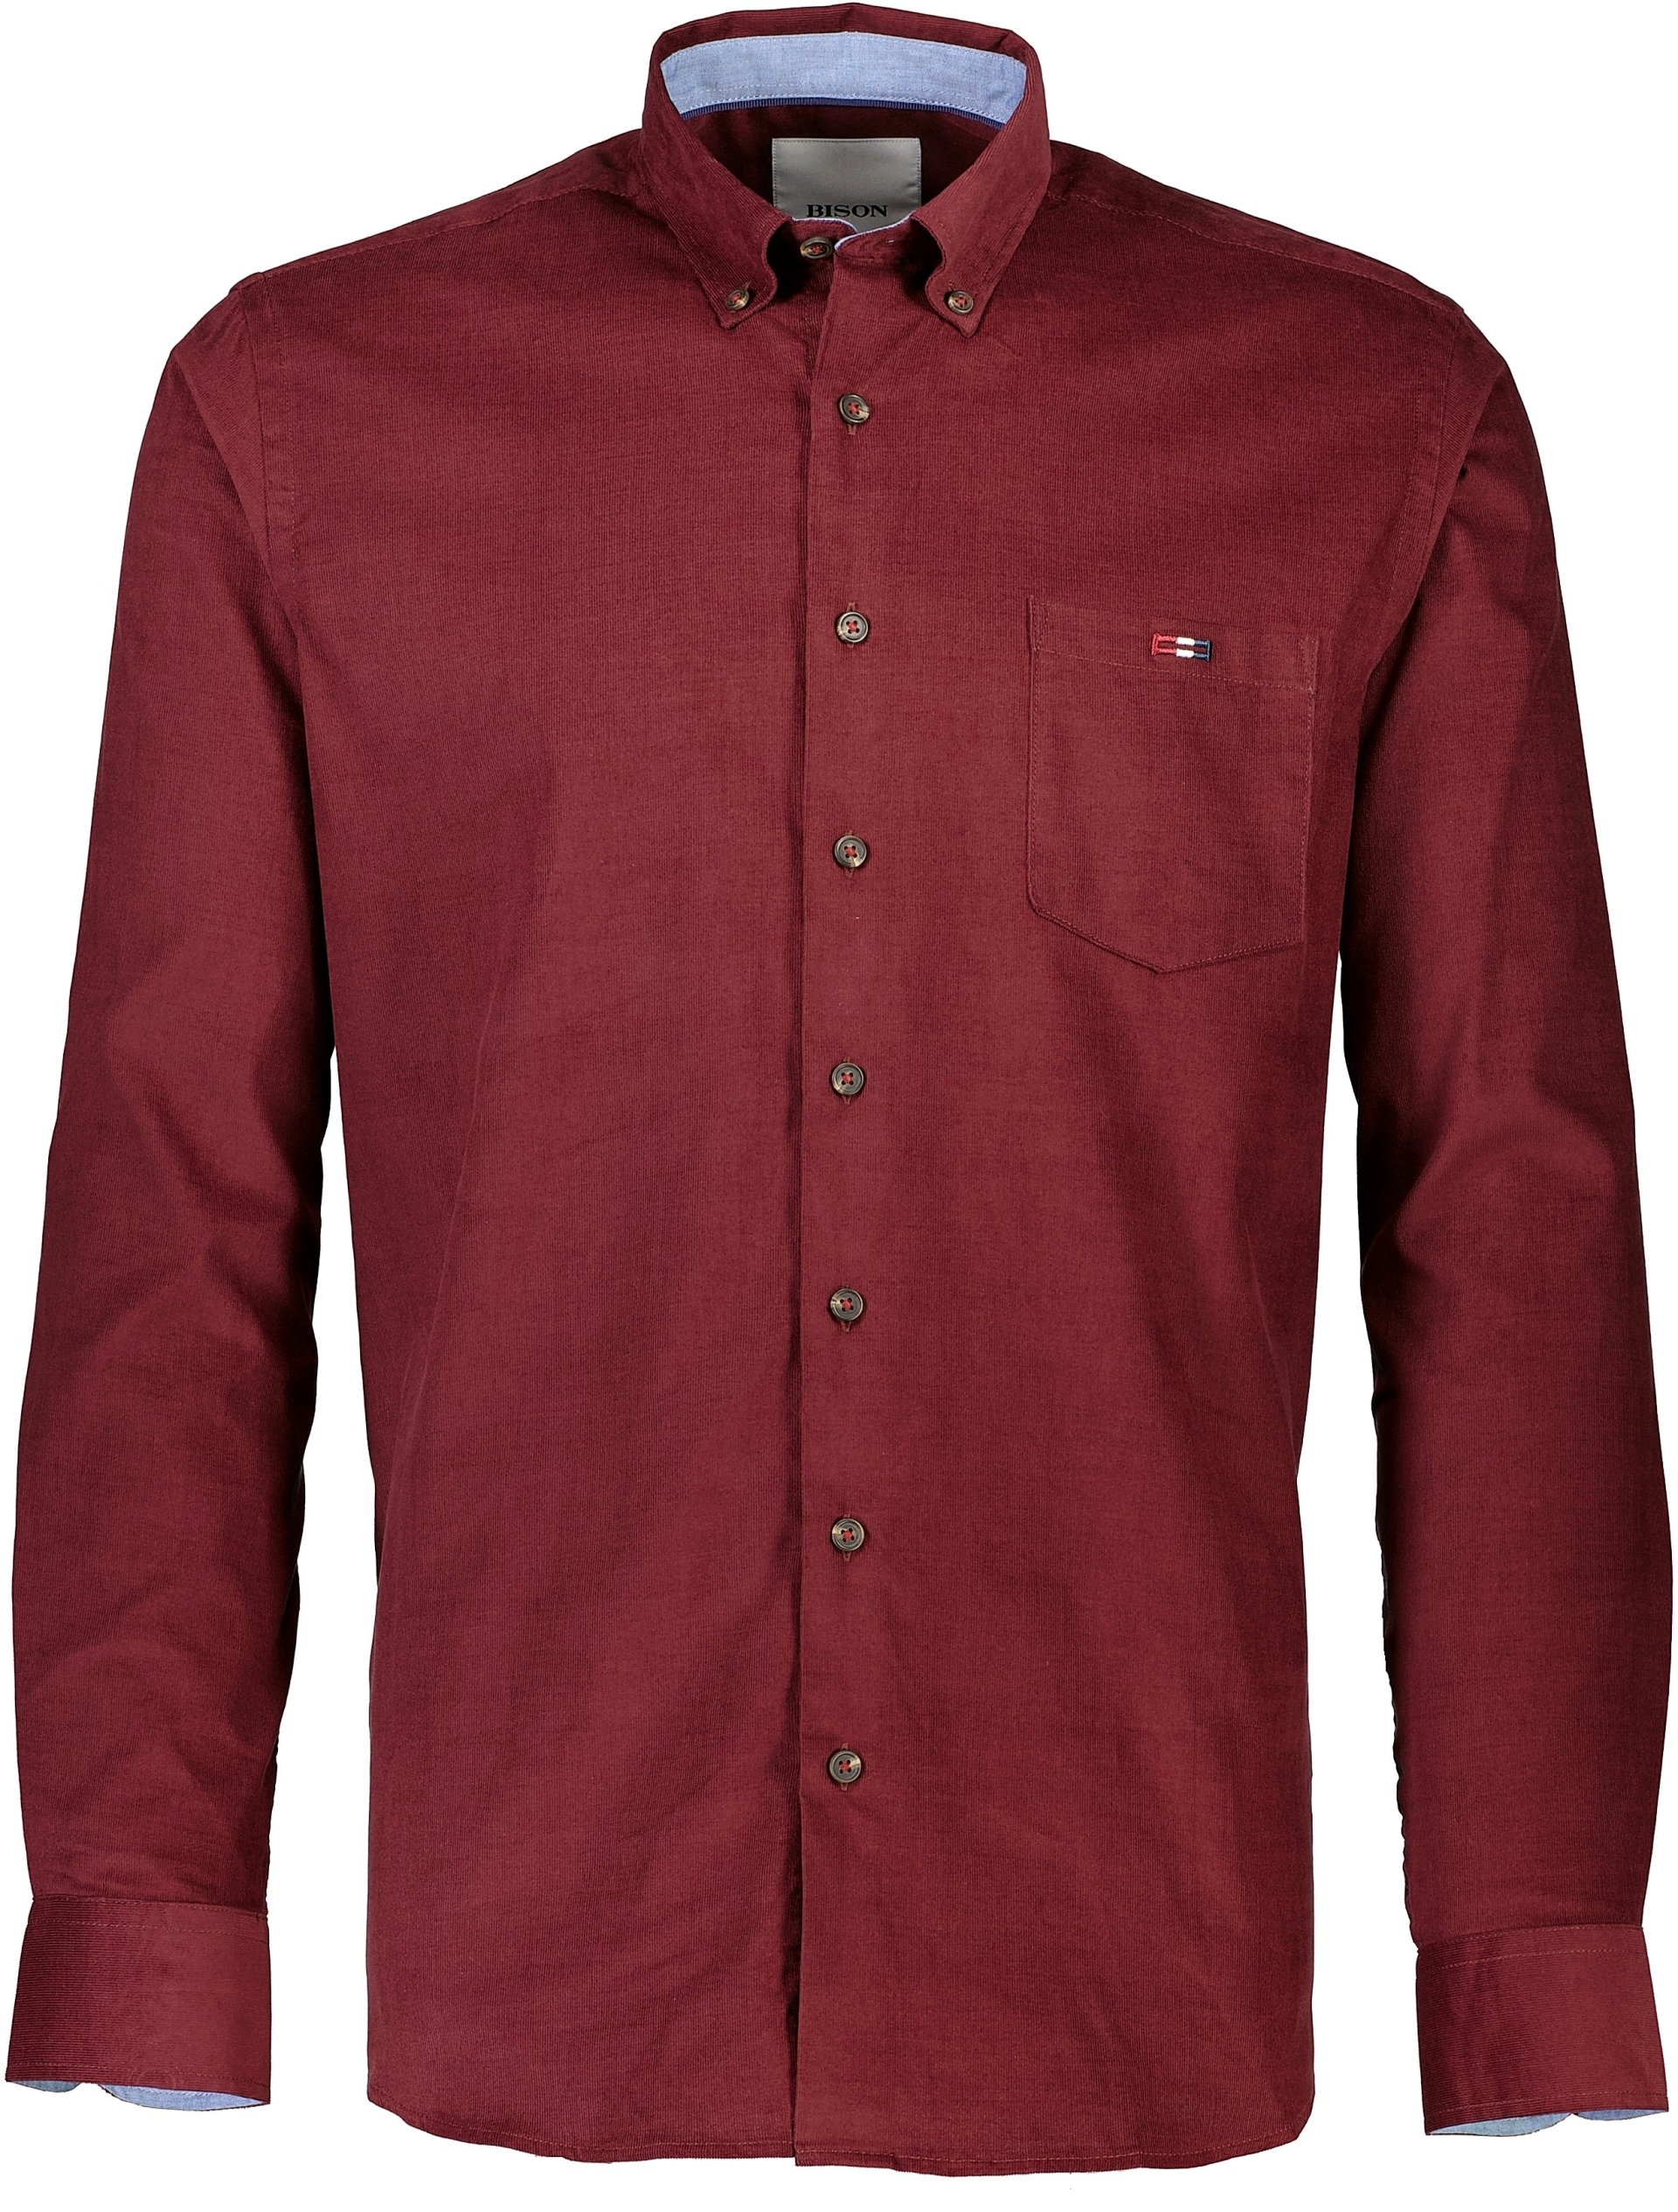 Bison Business casual skjorte rød / bordeaux